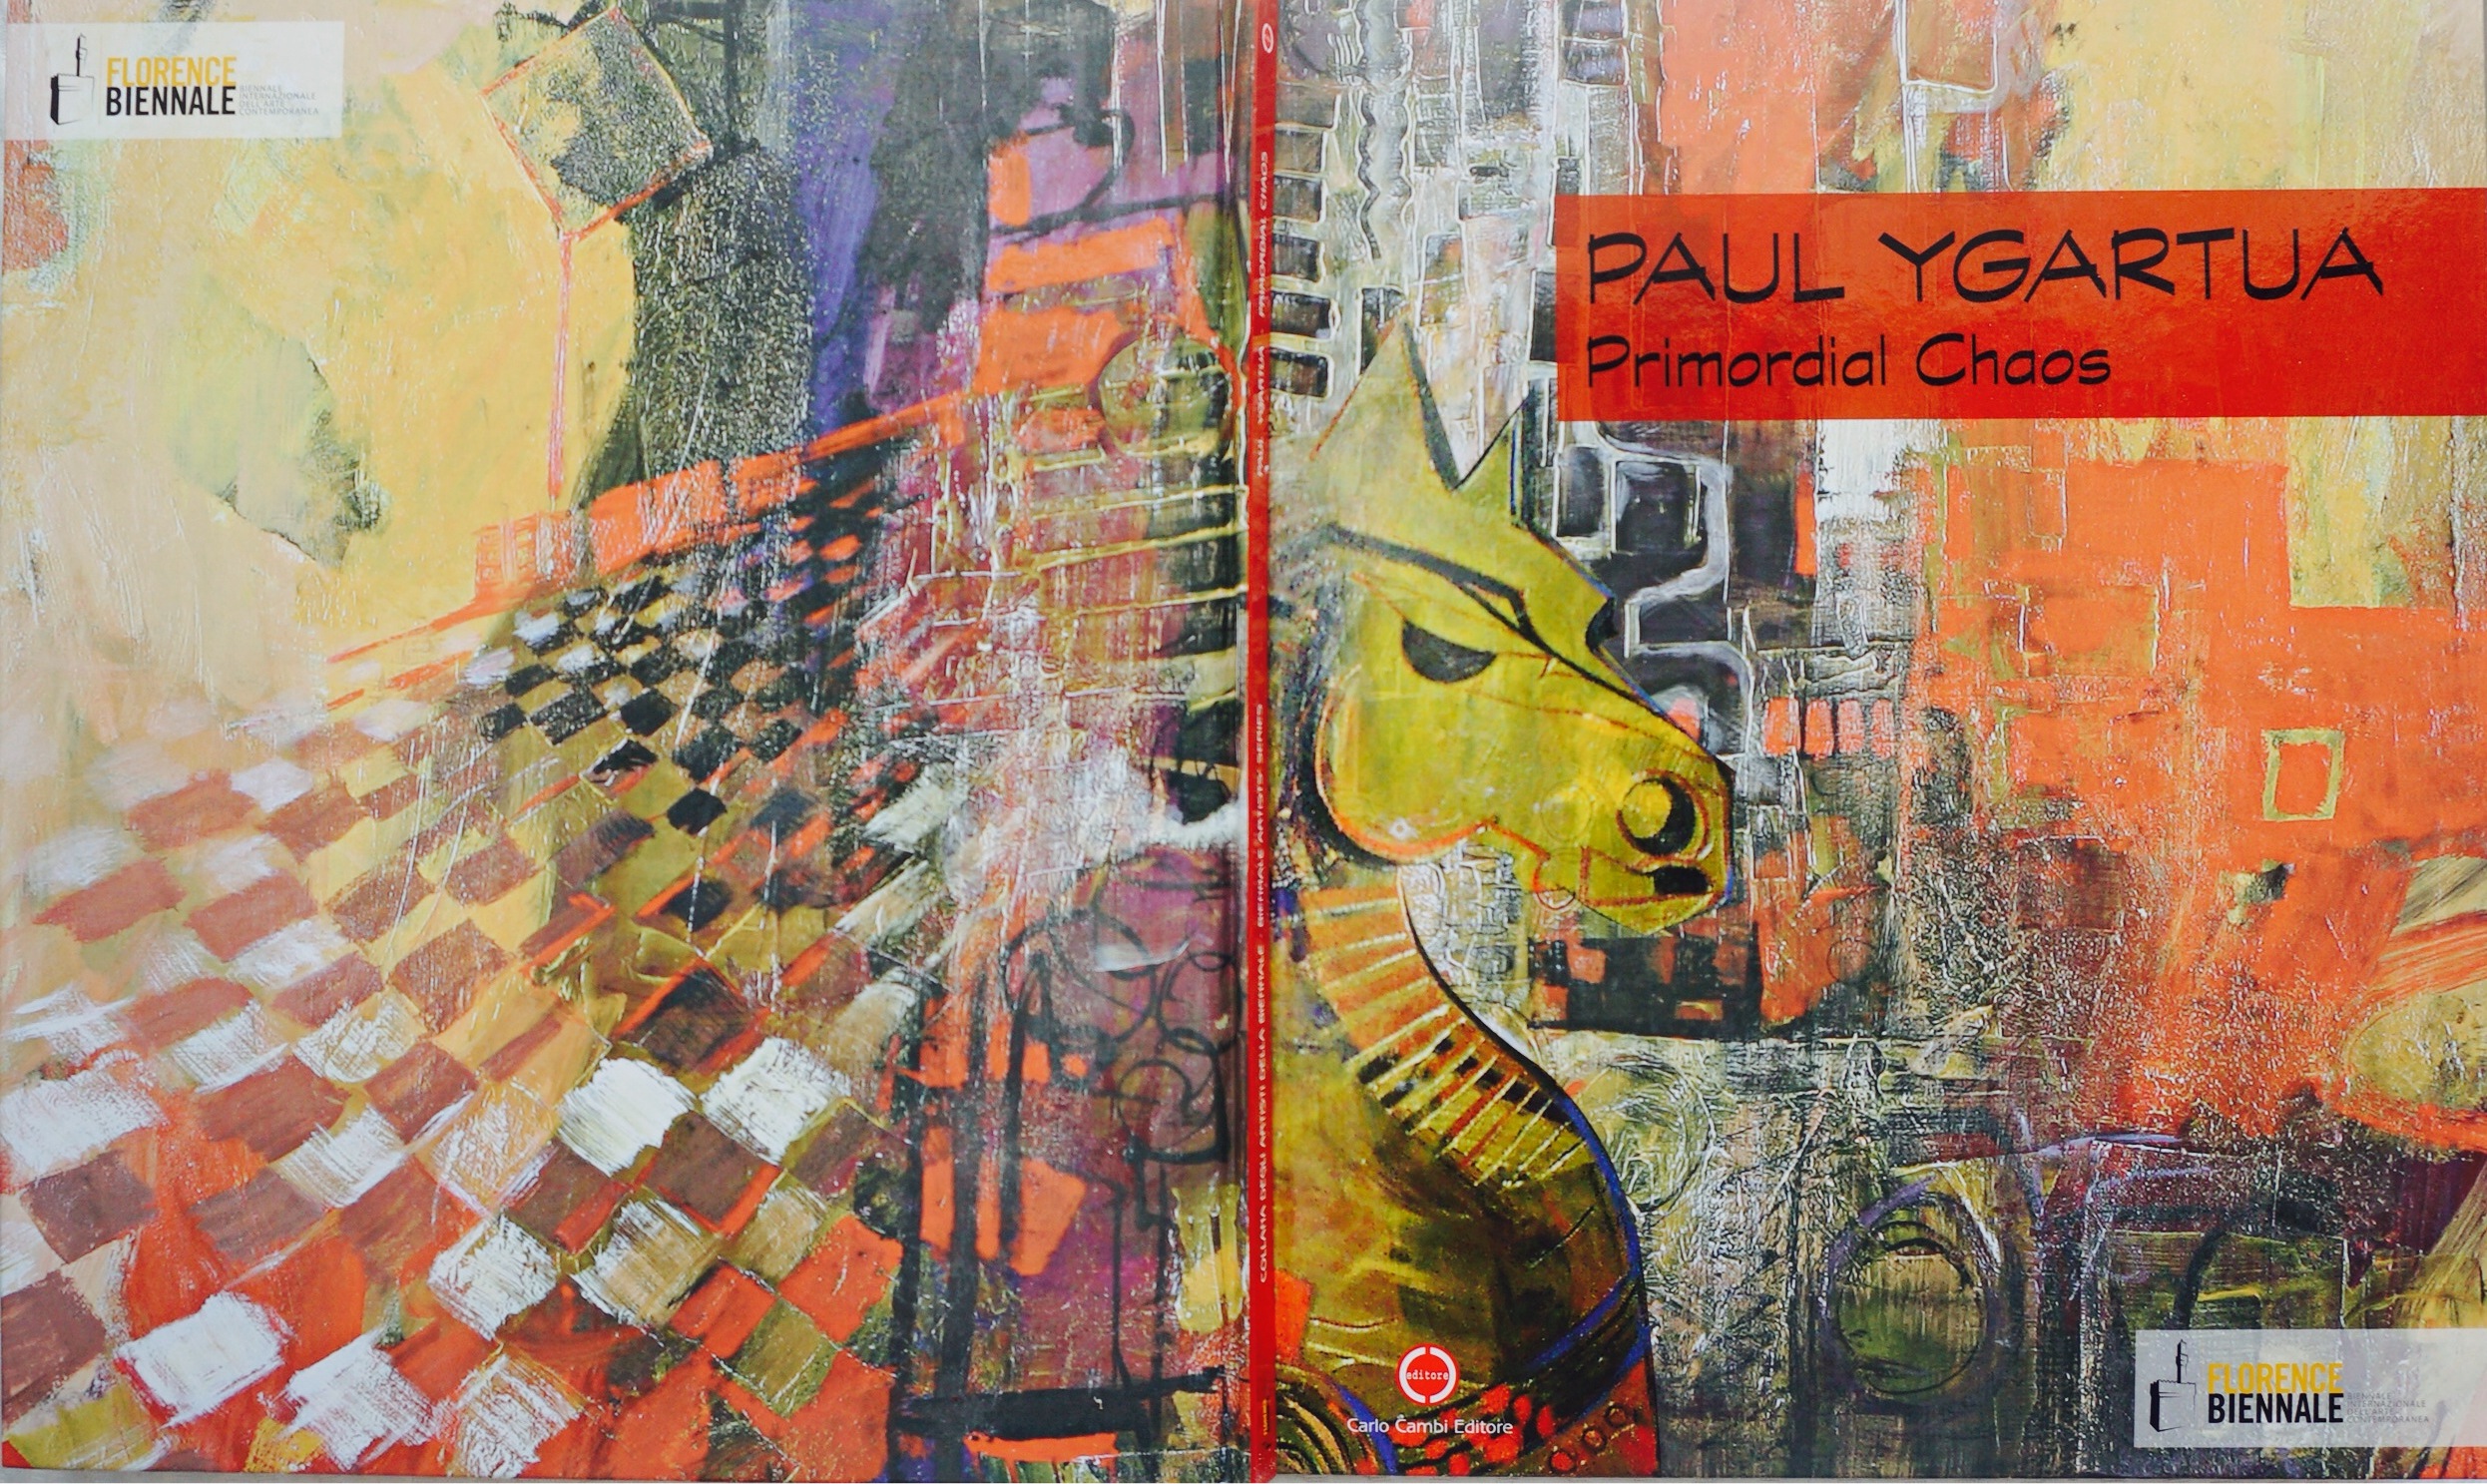 Paul-Ygartua-Biennale-Book